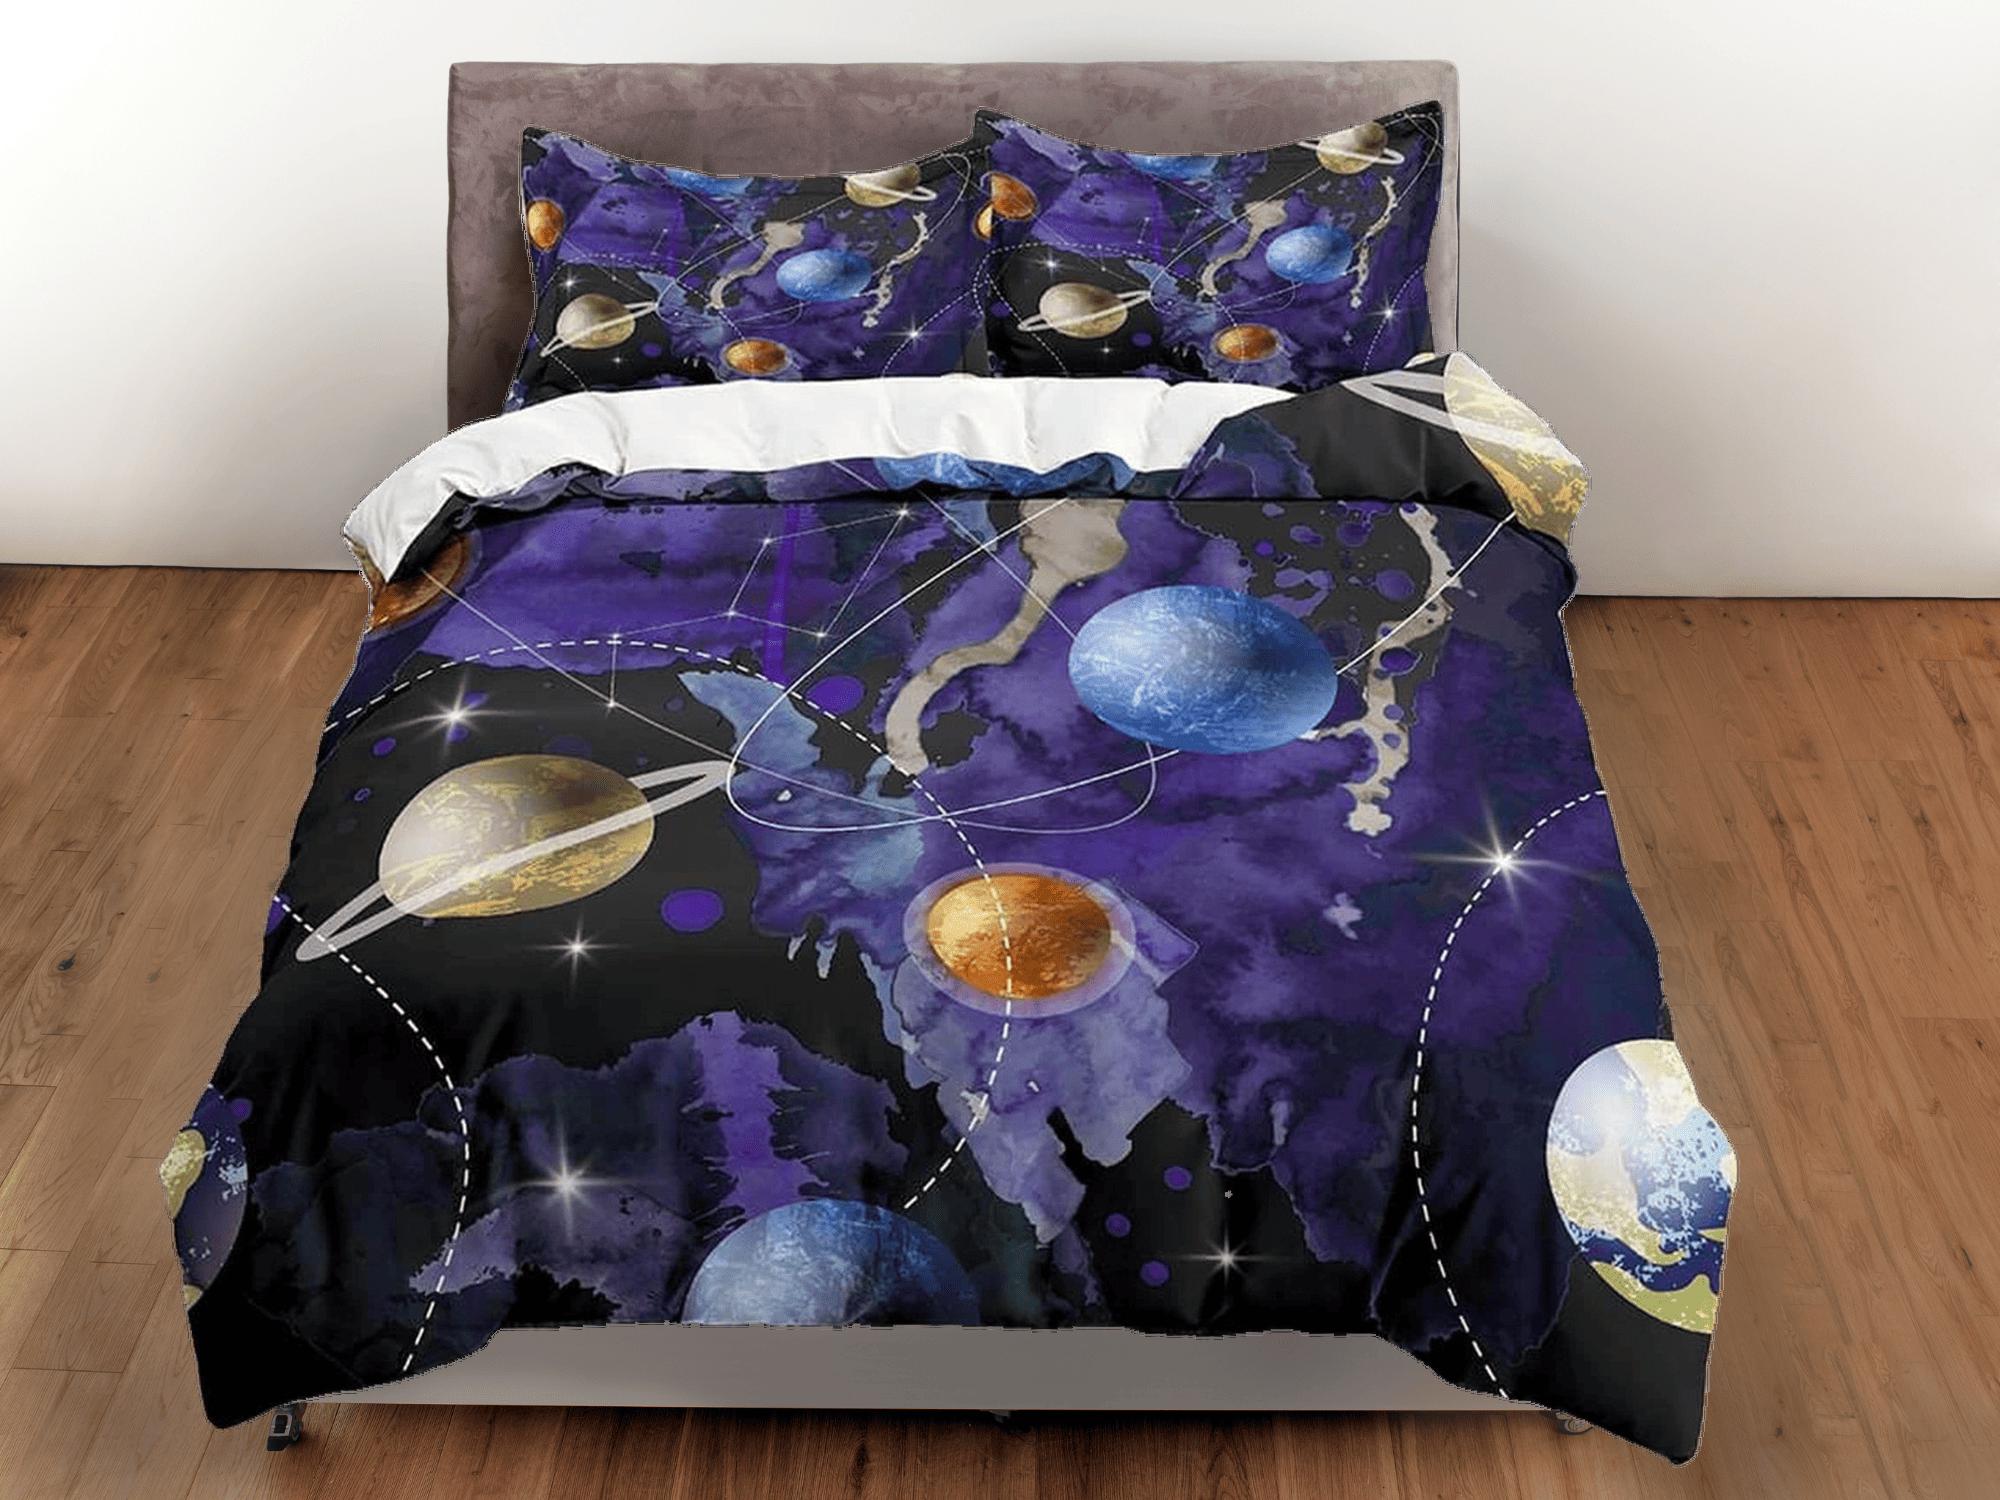 daintyduvet Planets galaxy purple bedding, outer space bedding set full, cosmic duvet cover king, queen, dorm bedding, toddler bedding aesthetic duvet